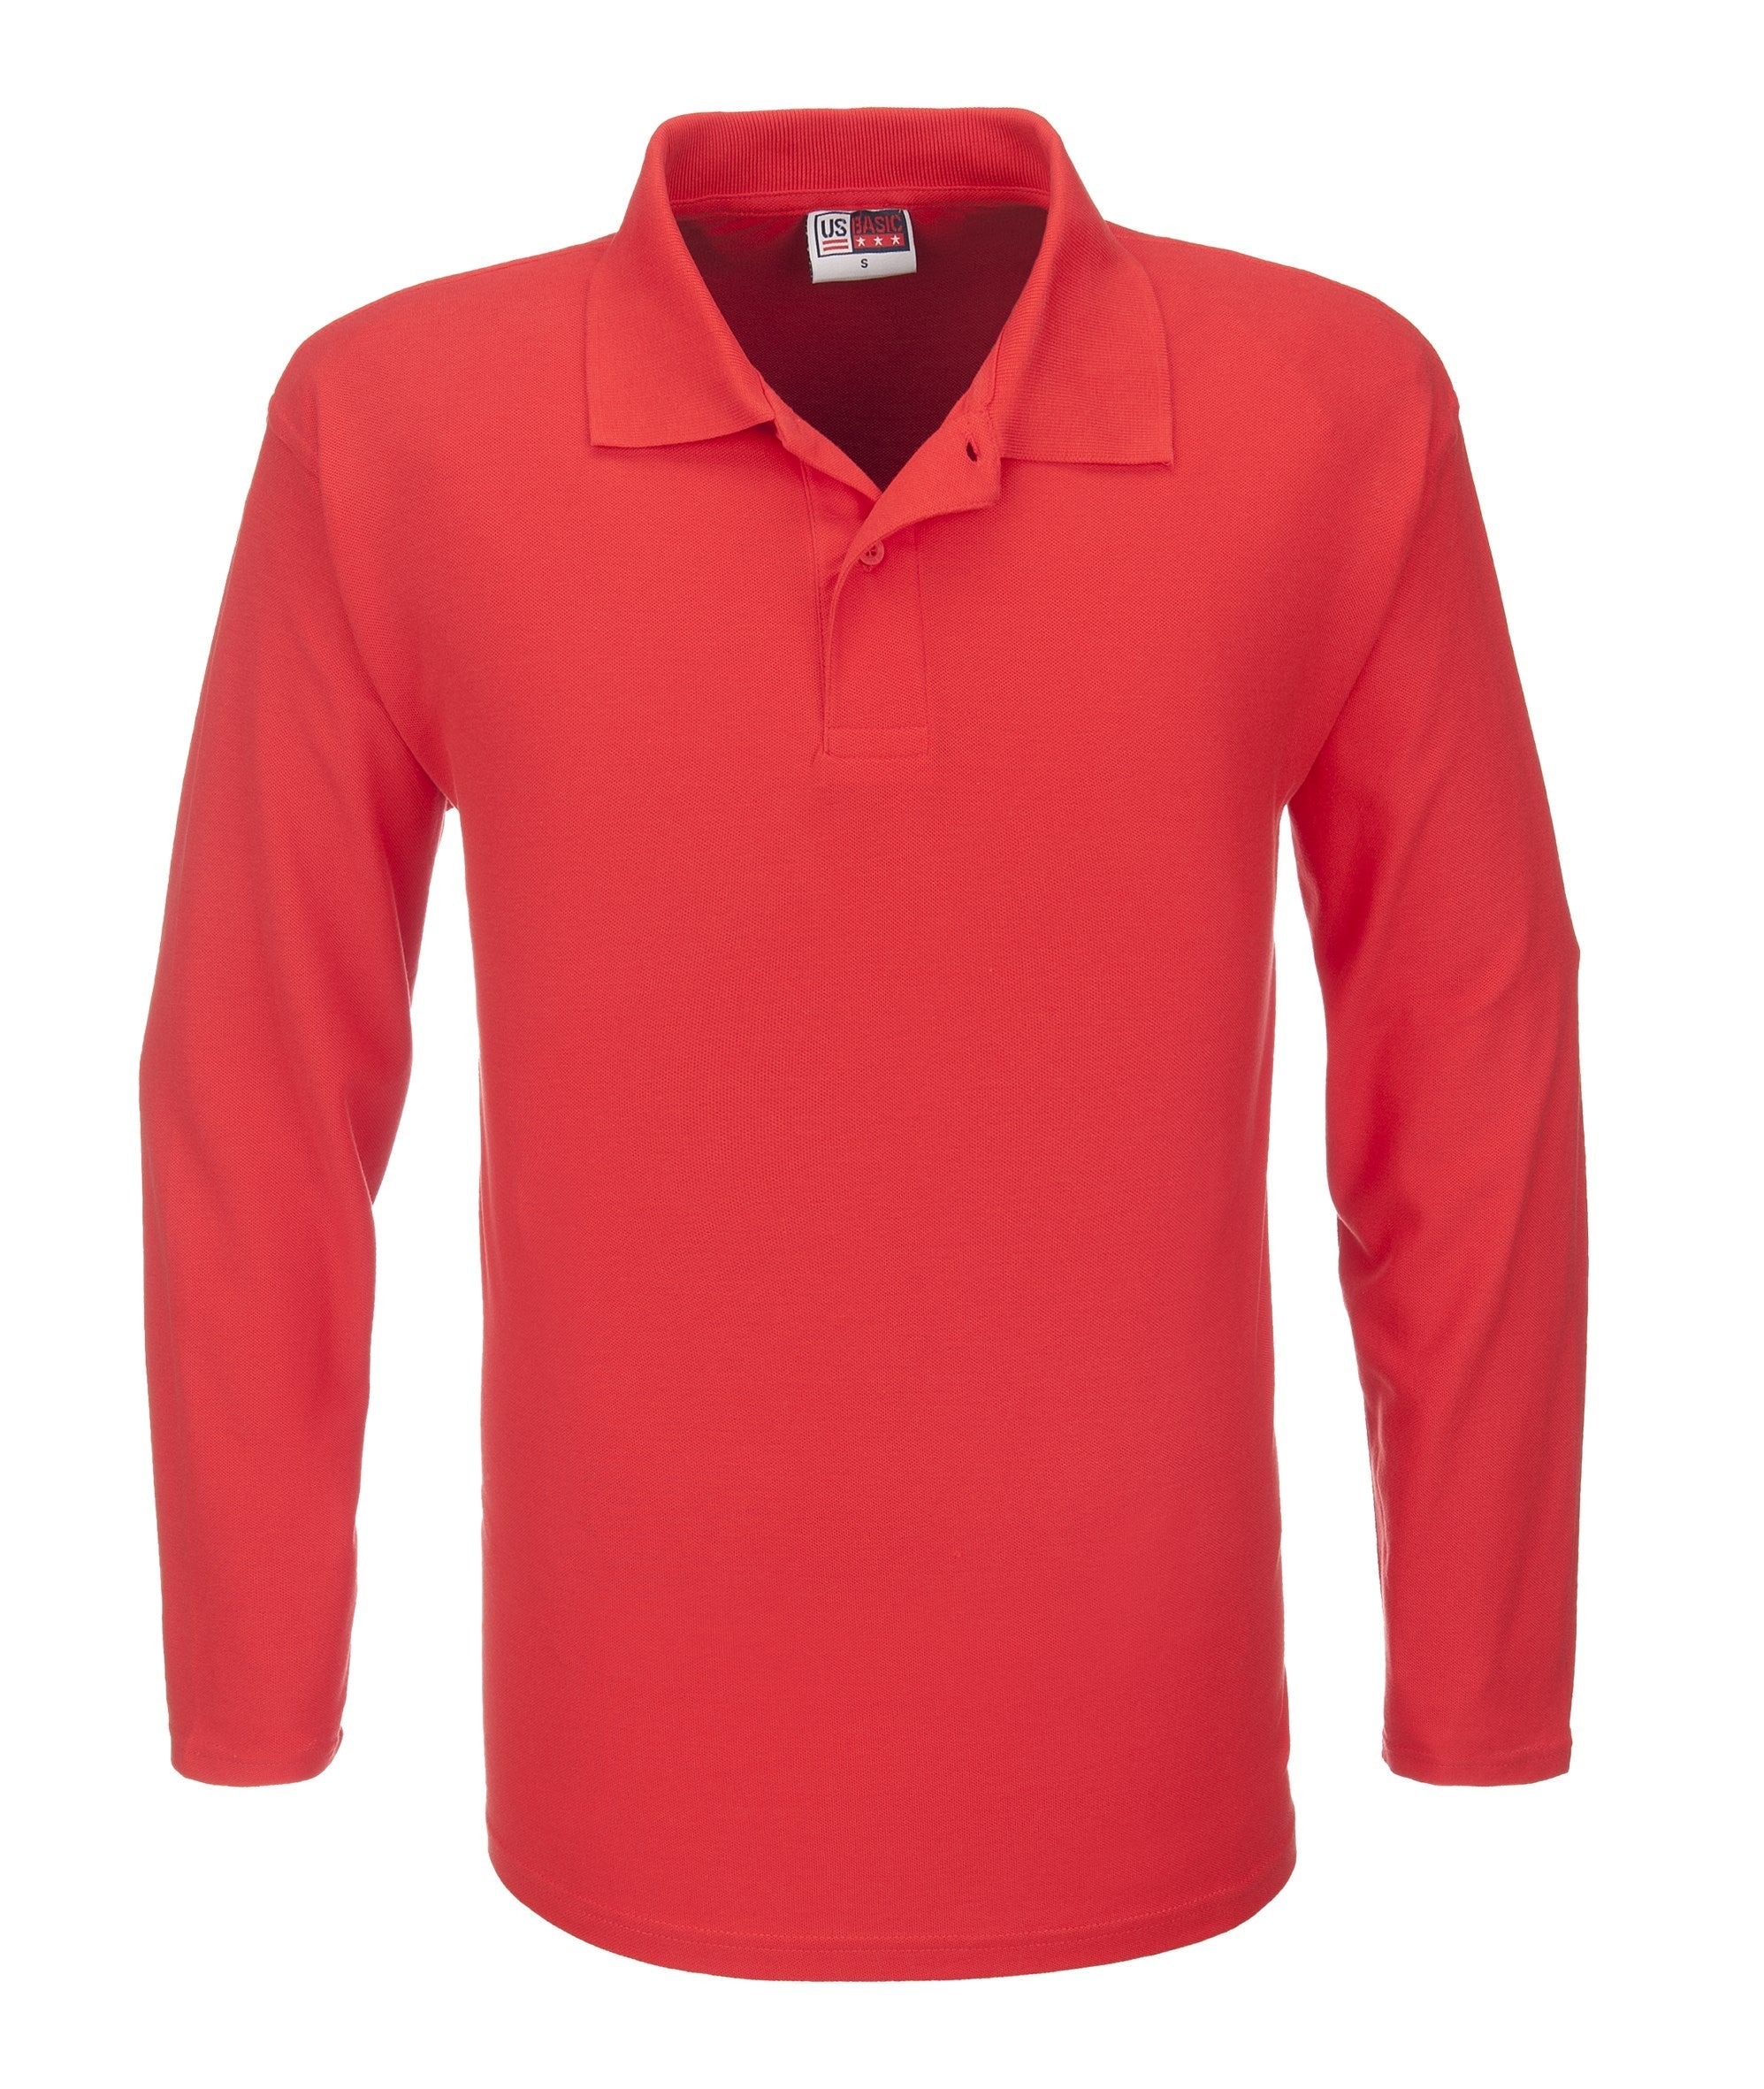 Mens Long Sleeve Boston Golf Shirt - Black Only-2XL-Red-R